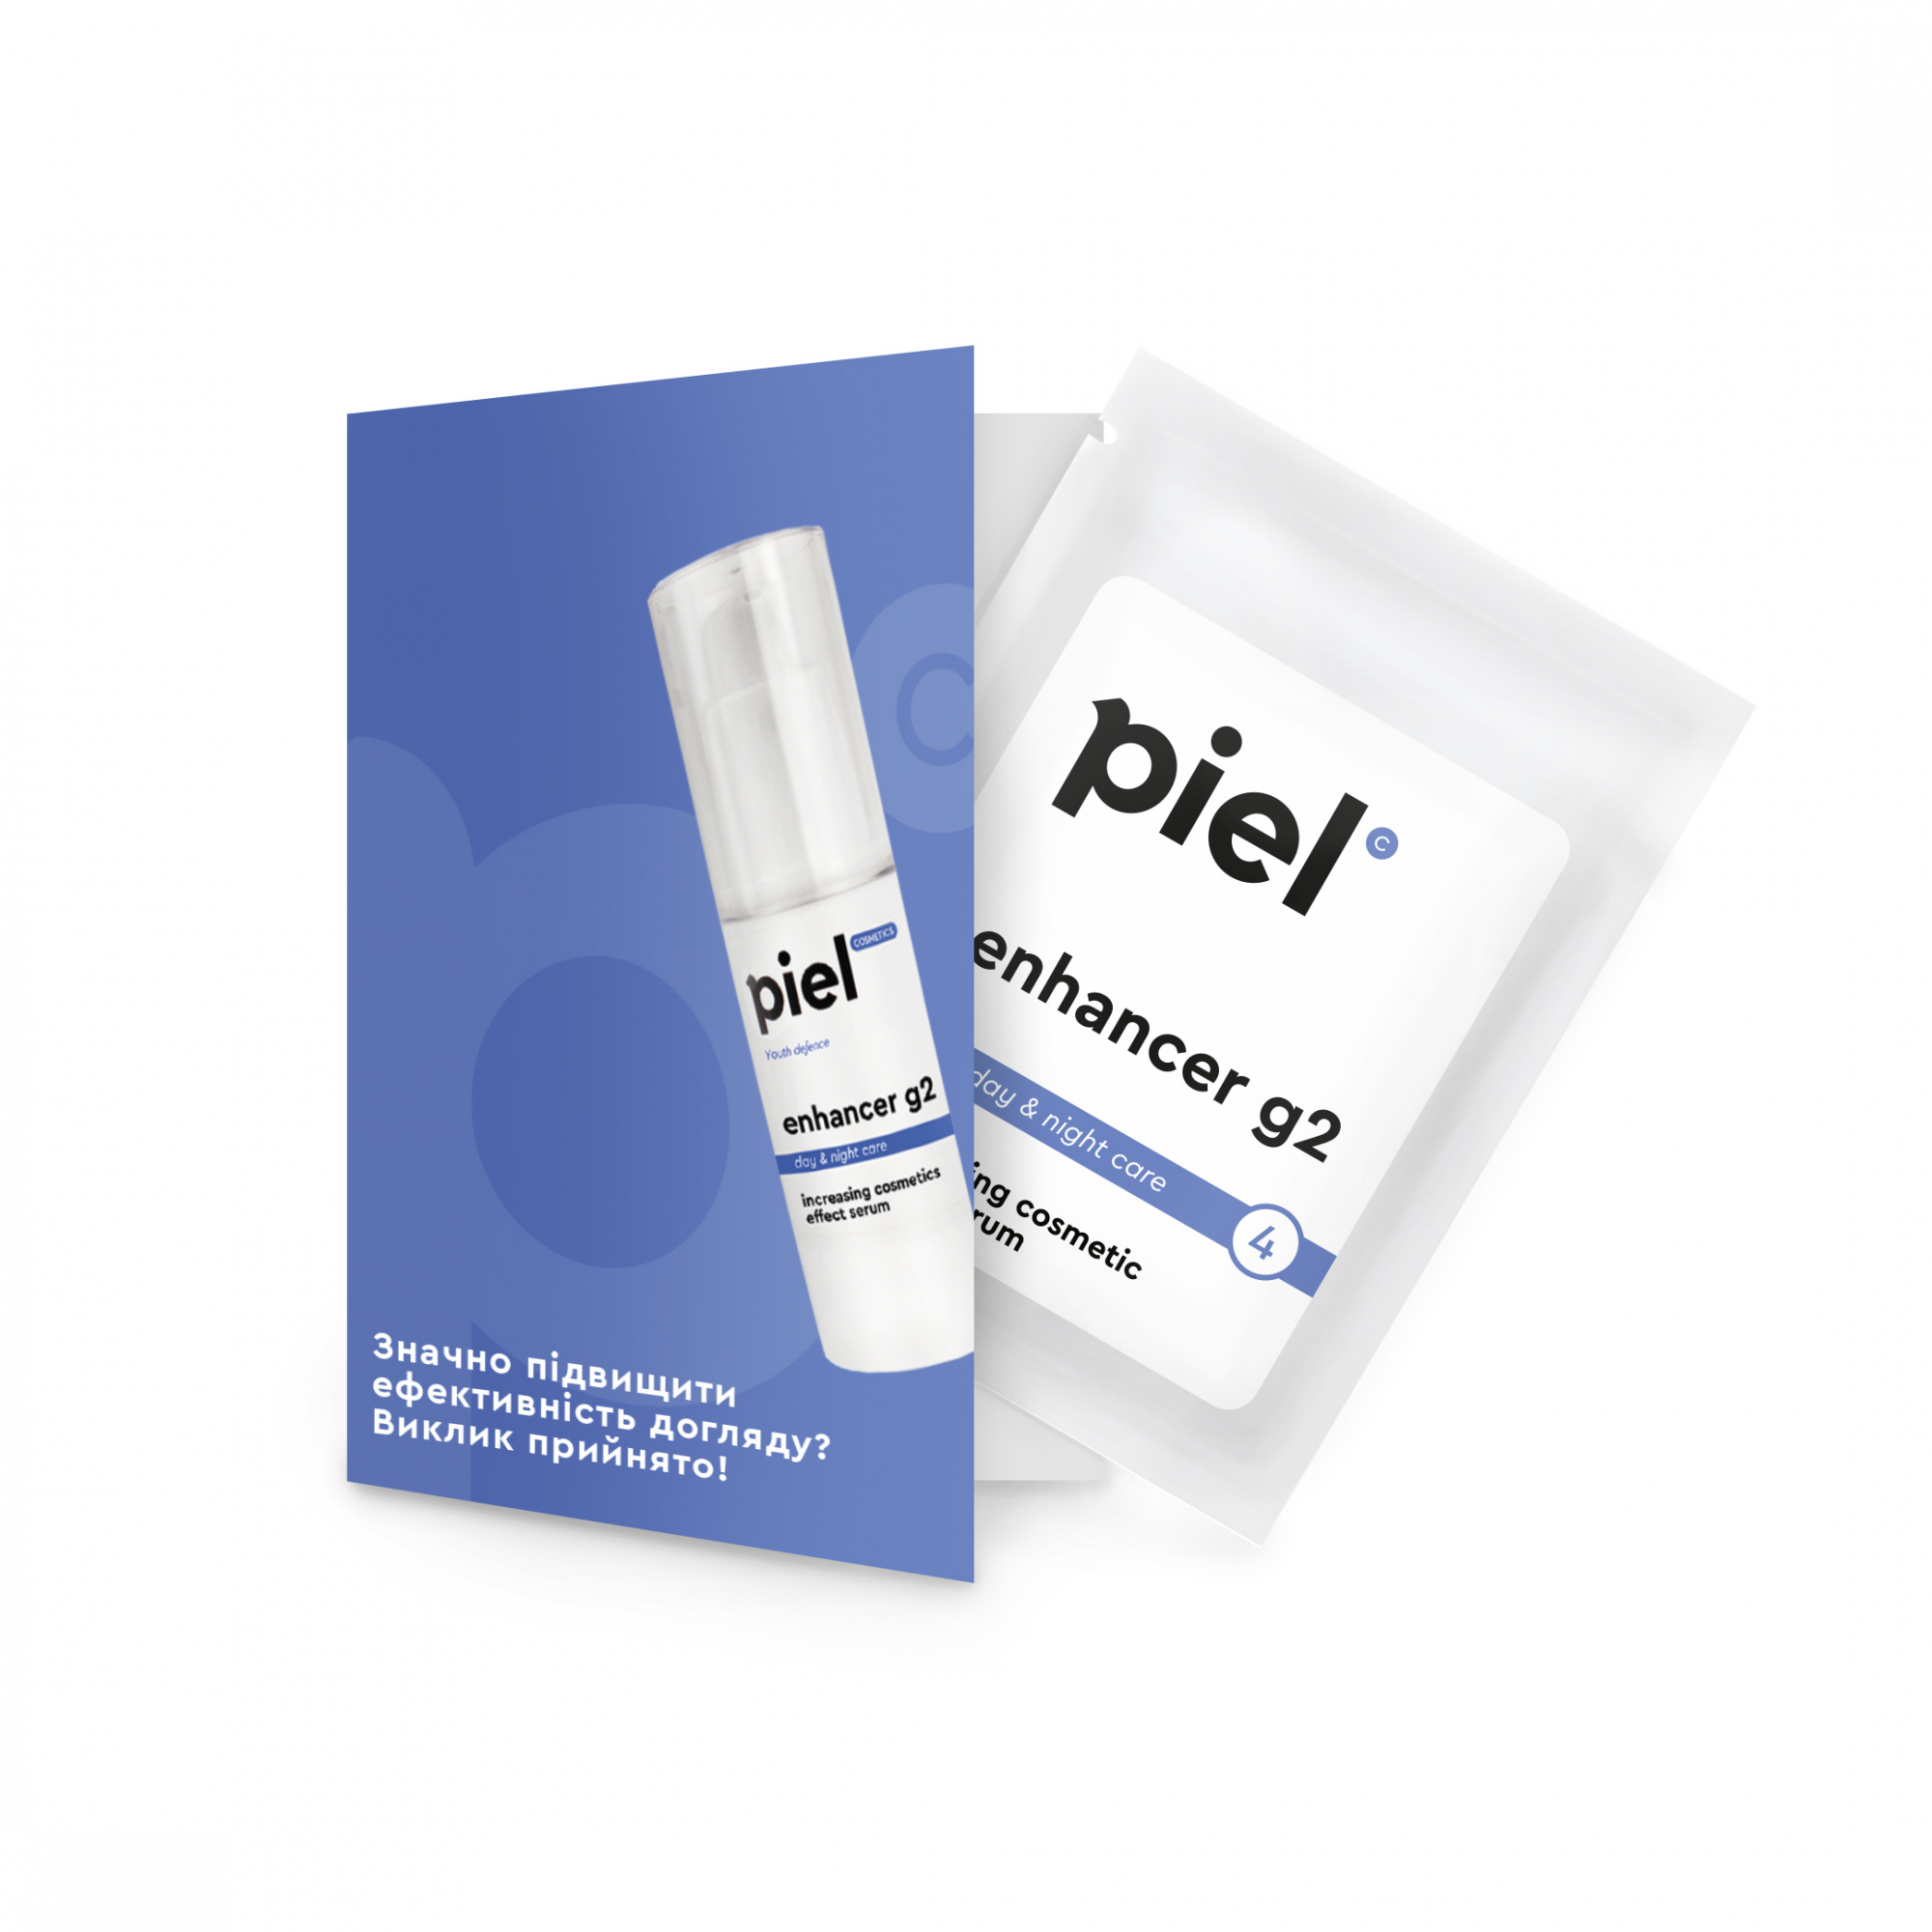 Miniature ENHANСER G2 Innovation from Piel Cosmetics: Serum-activator